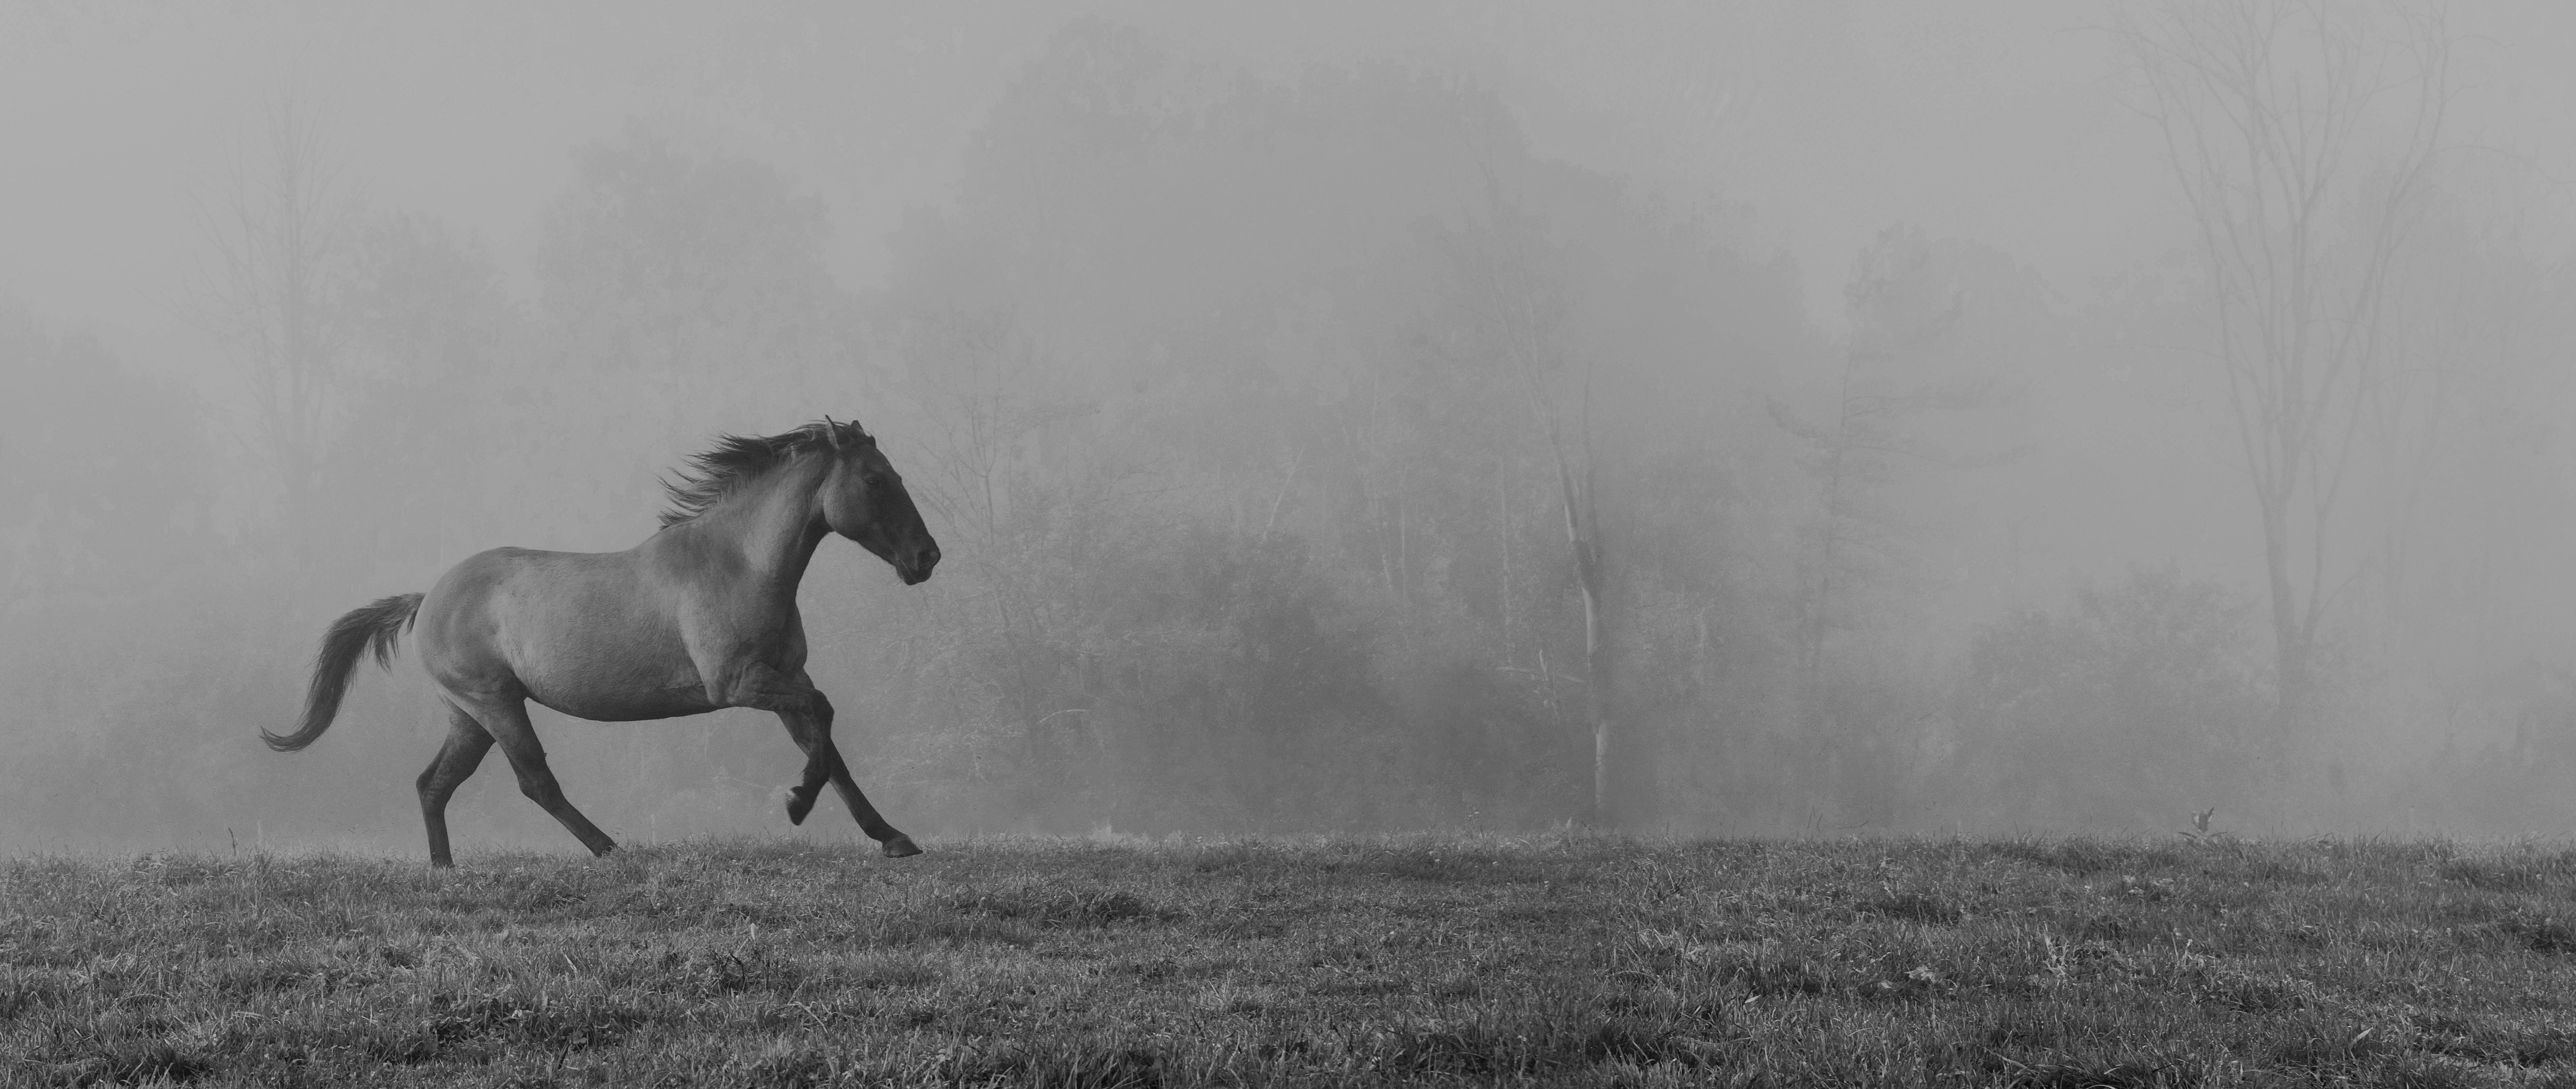 Sandra Lee Kaplan Black and White Photograph - Horse in Fog (horse, black and white, photograph, landscape)